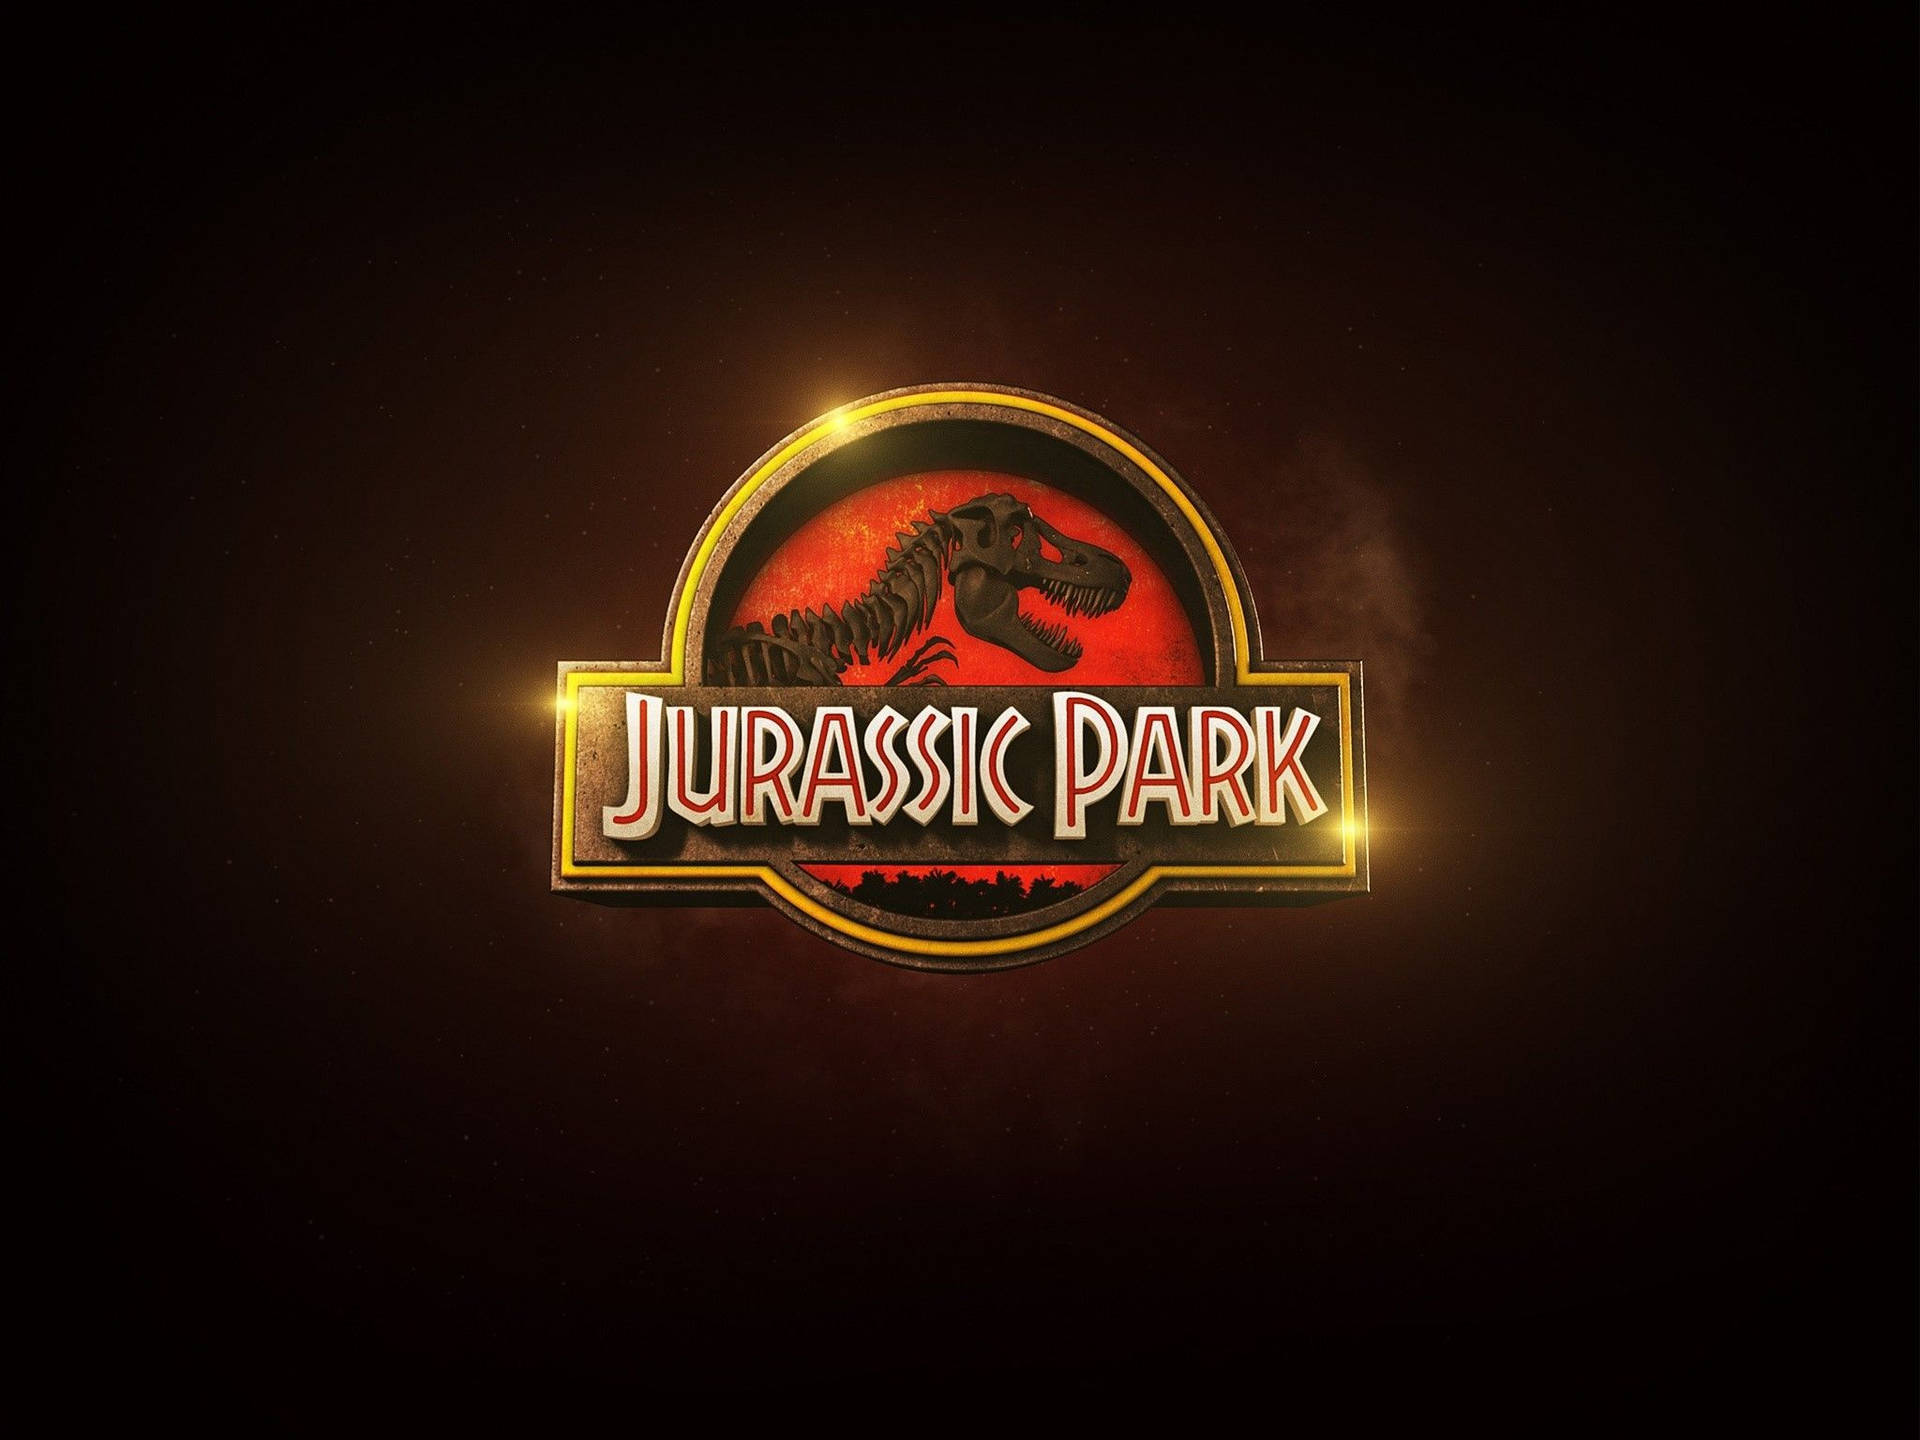 Free Jurassic Park Wallpaper Downloads, Jurassic Park Wallpaper for FREE